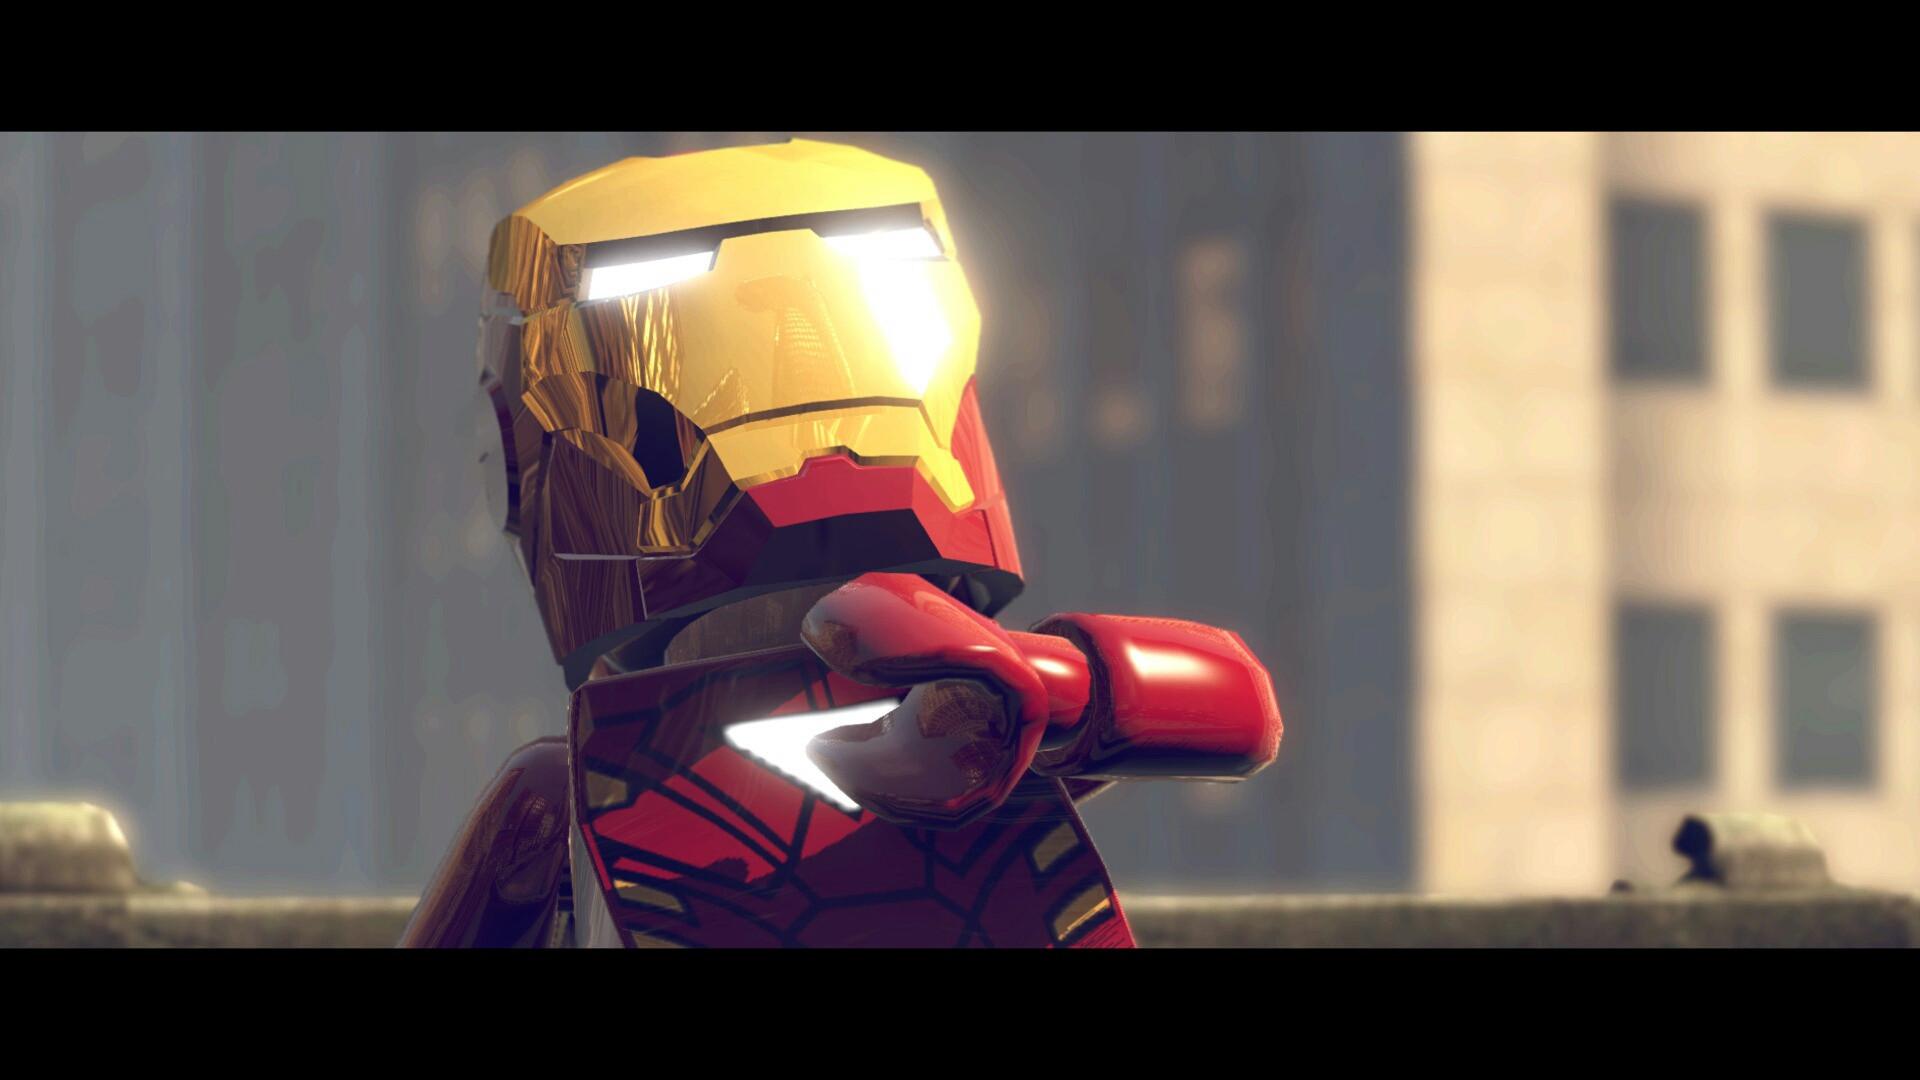 Aww you're so cute little LEGO Iron Man